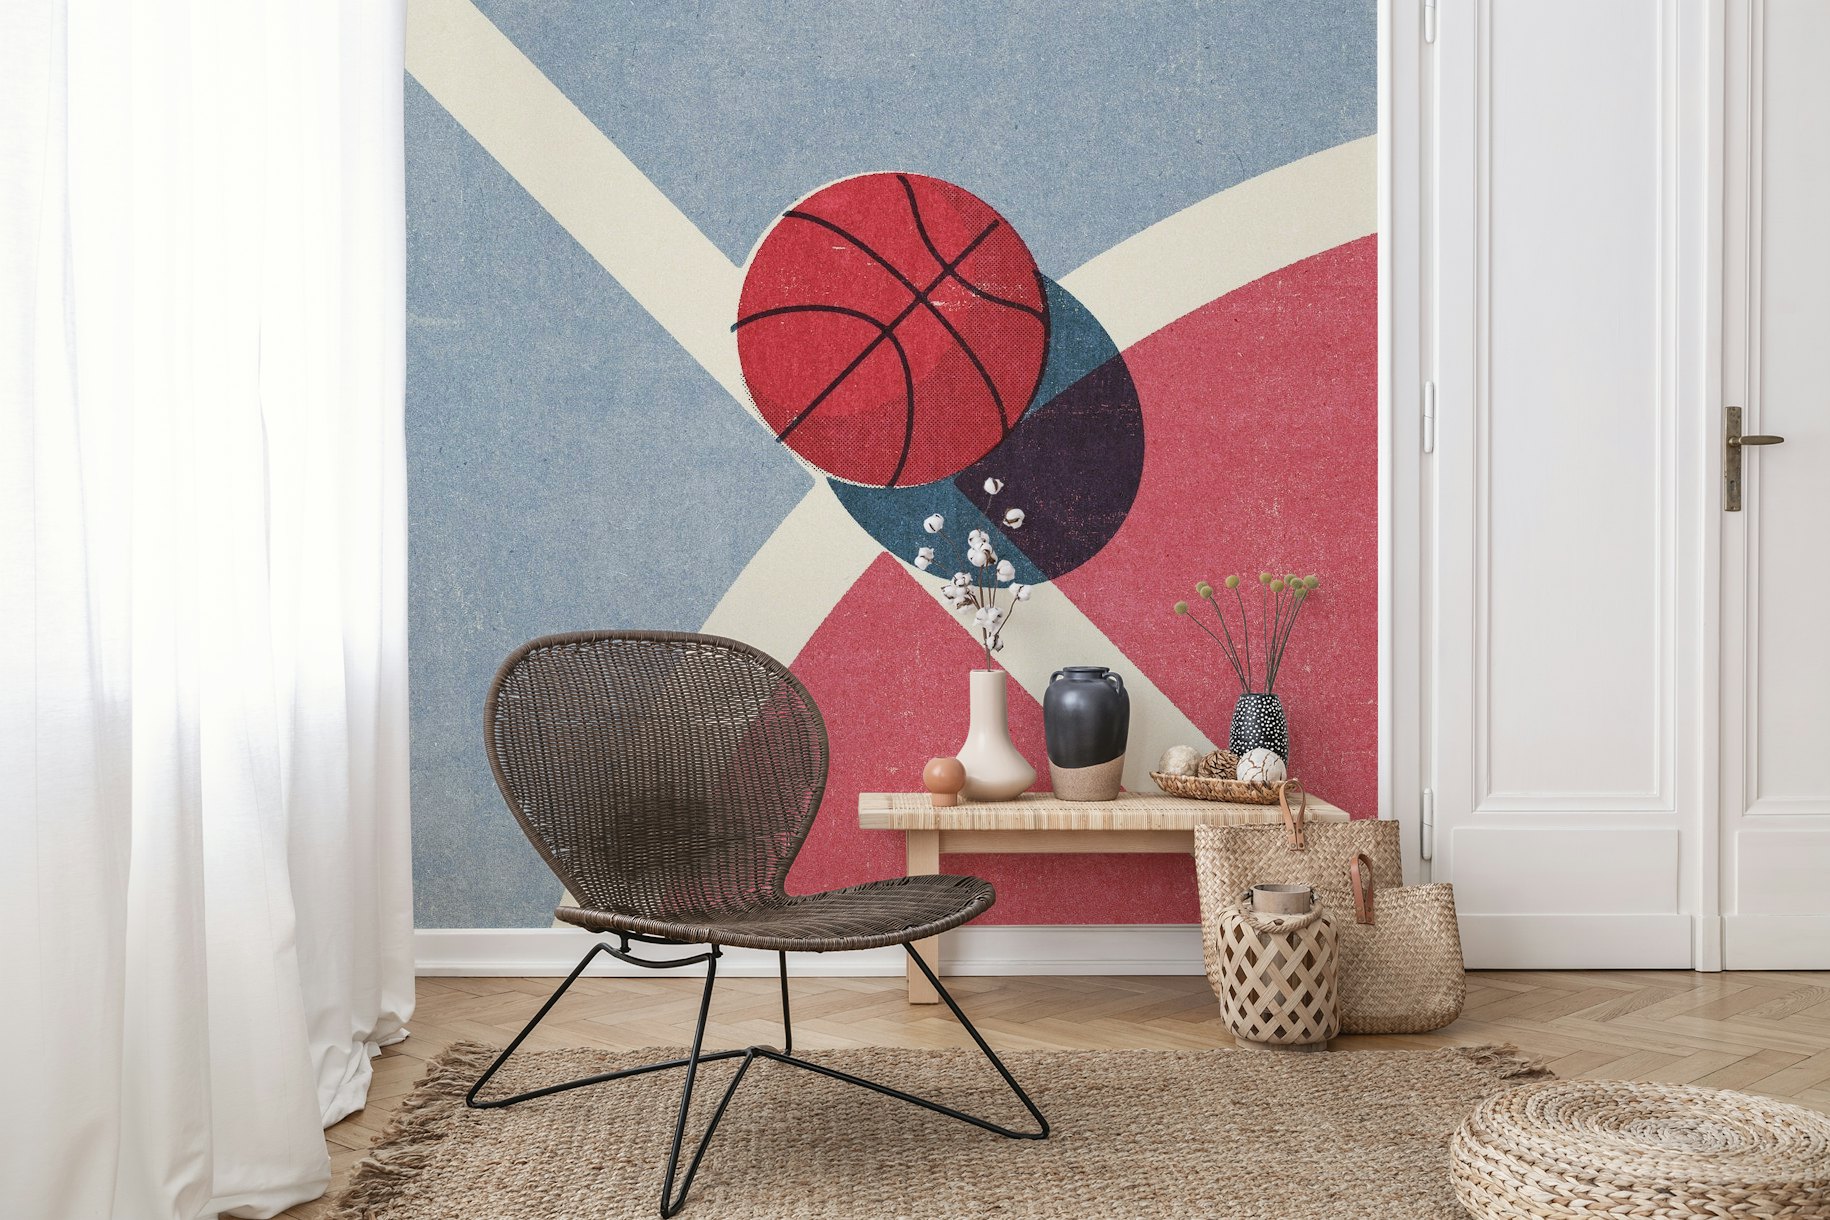 BALLS Basketball (Outdoor) wallpaper